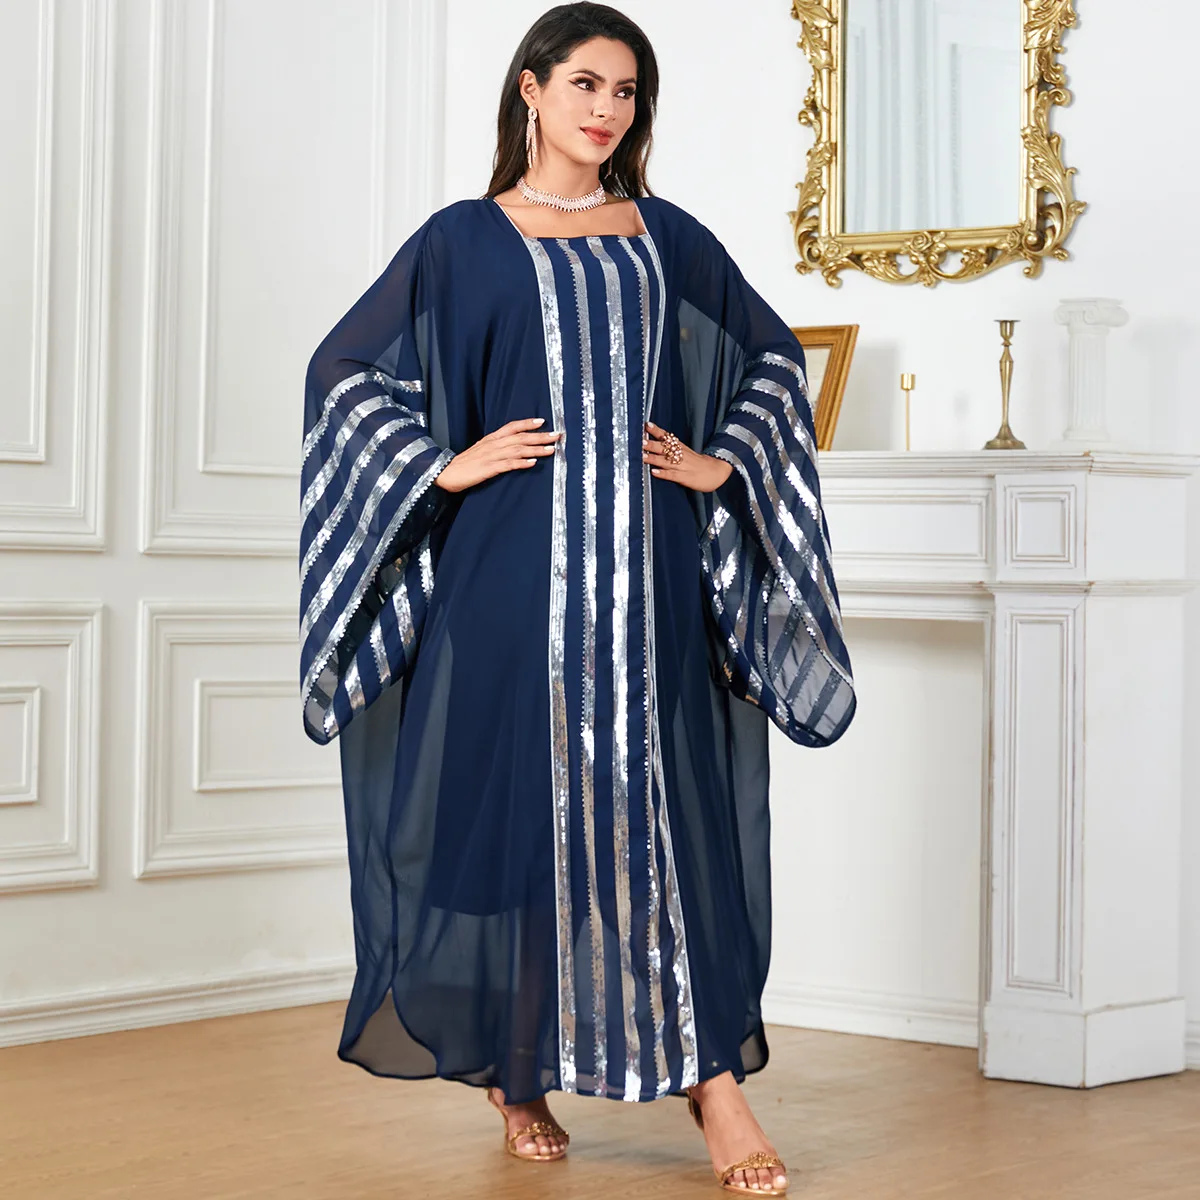 

Morocco Sequin Abaya Batwing Sleeve Maxi Dress for Women Muslim Kaftan Dubai Turkey Loose Caftan Islam Marocain Africa Clothing